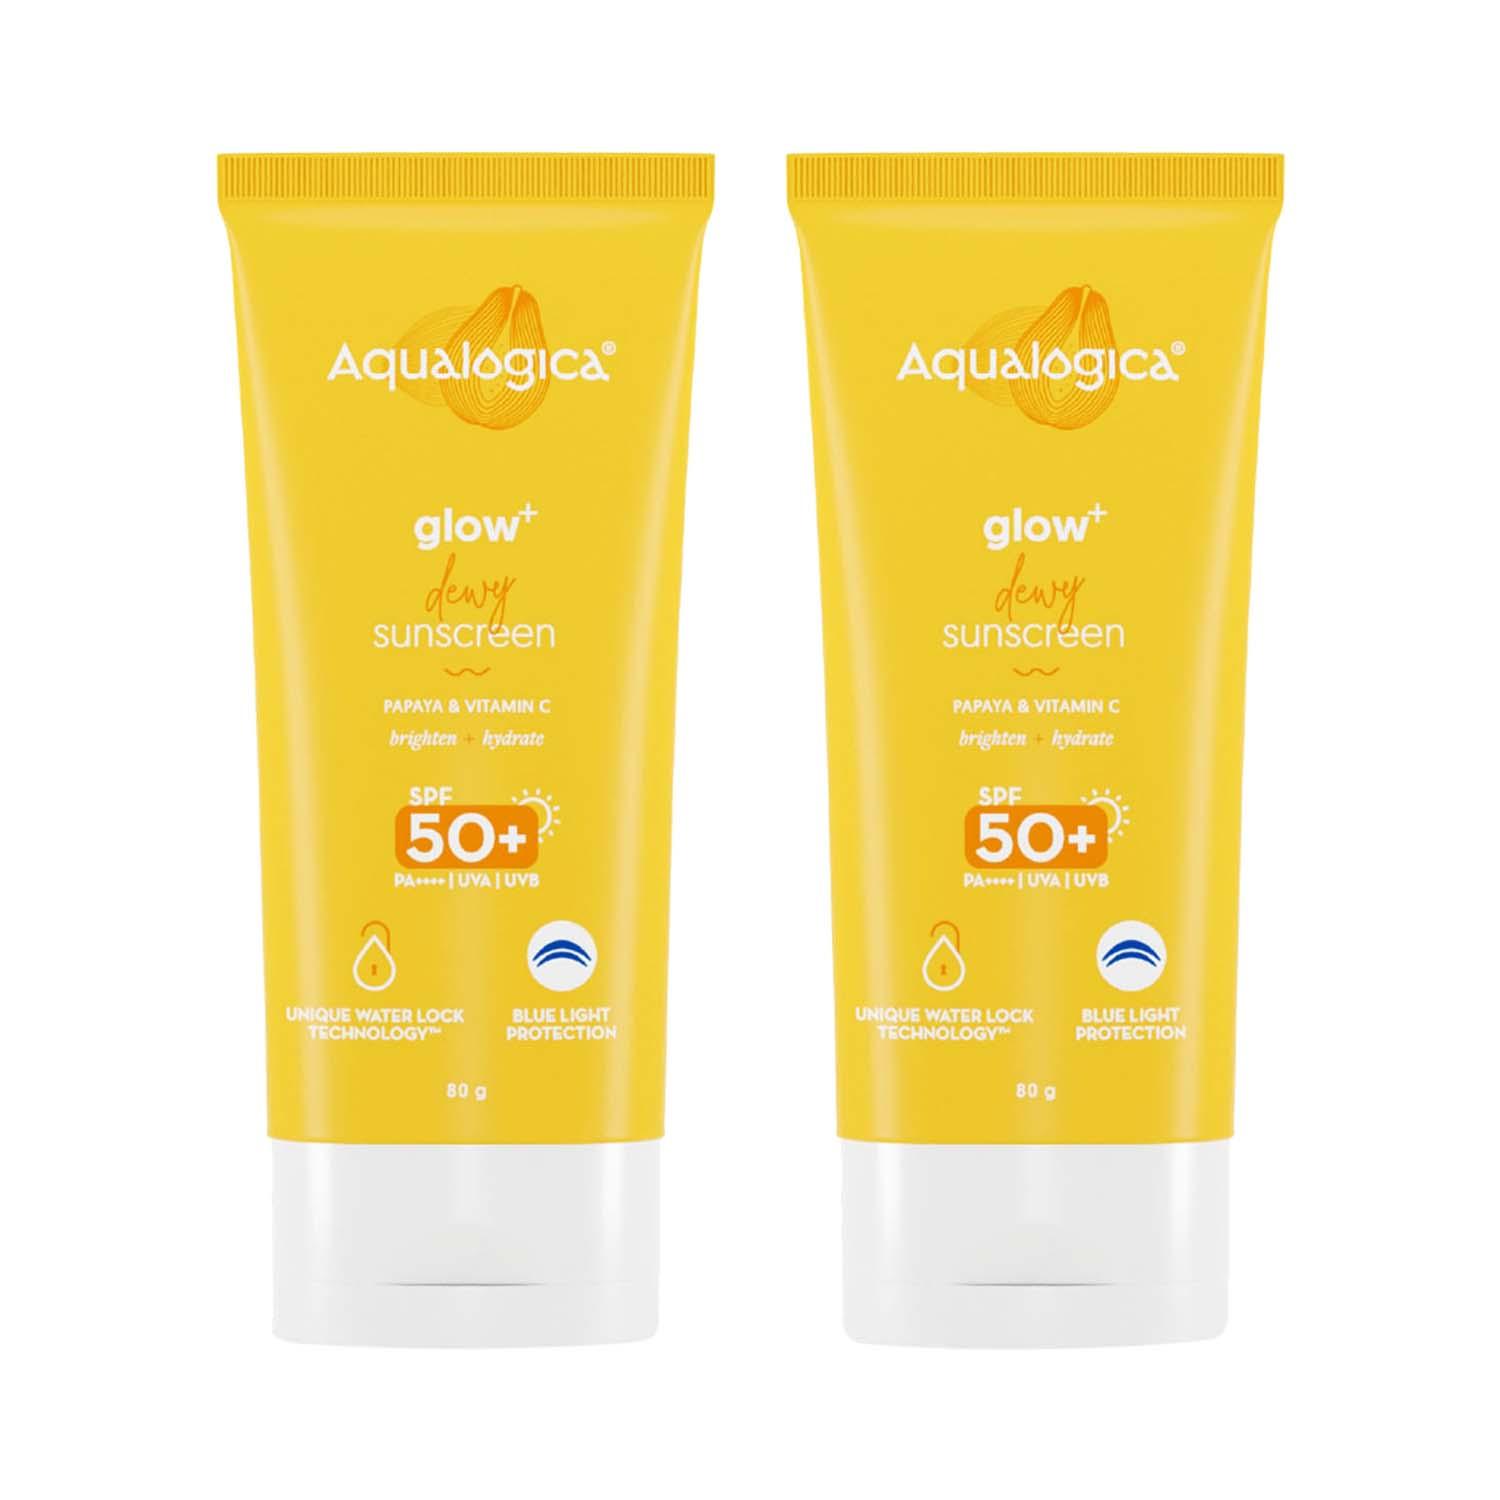 Aqualogica Glow+ Dewy Sunscreen - 80g (Pack of 2) Combo